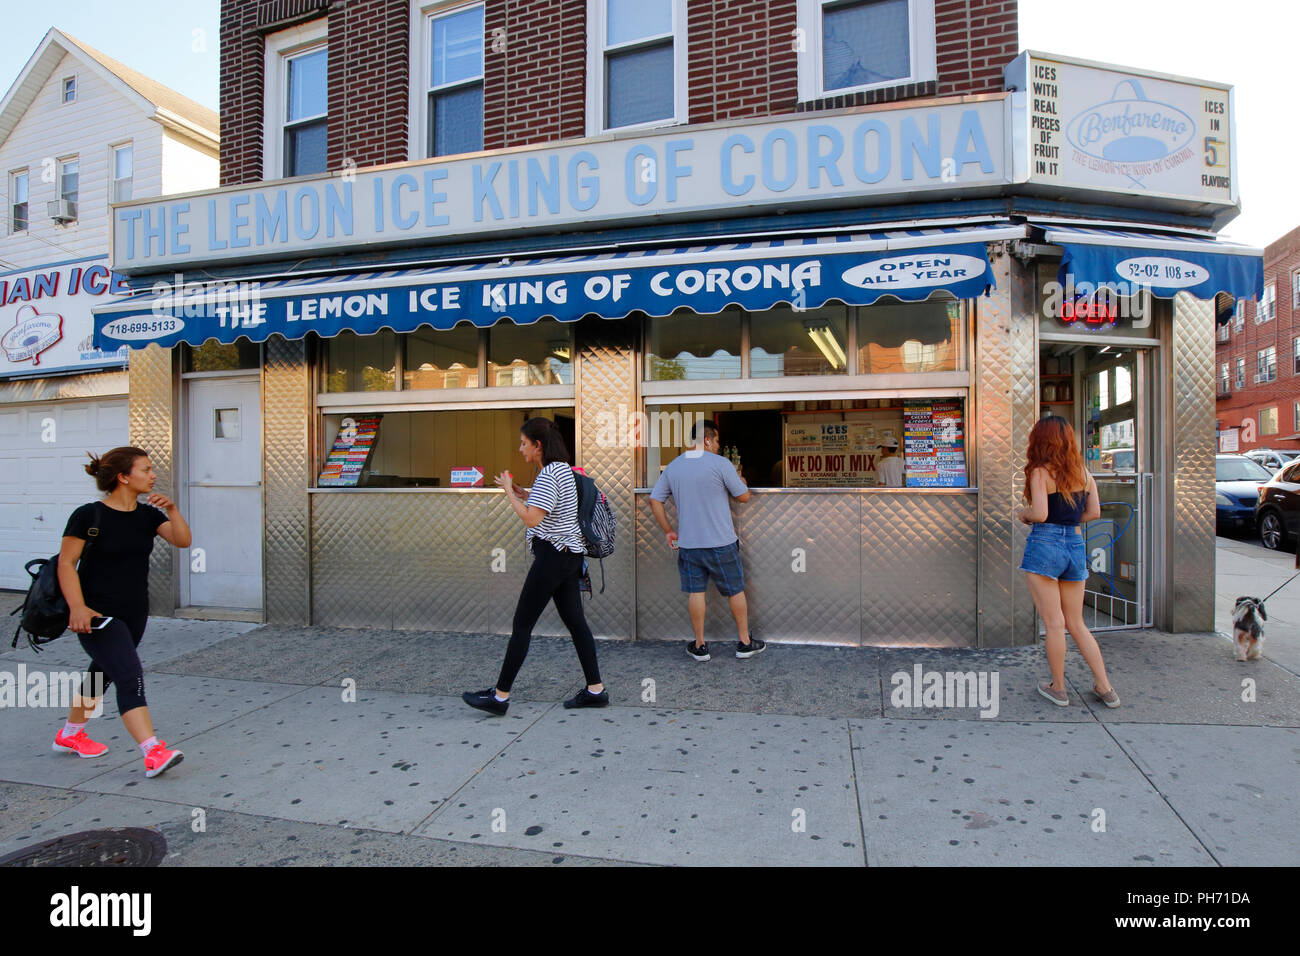 The Lemon Ice King of Corona, 52-02 108th St, Queens, NY. exterior of an Italian ice shop in the Corona neighborhood. Stock Photo